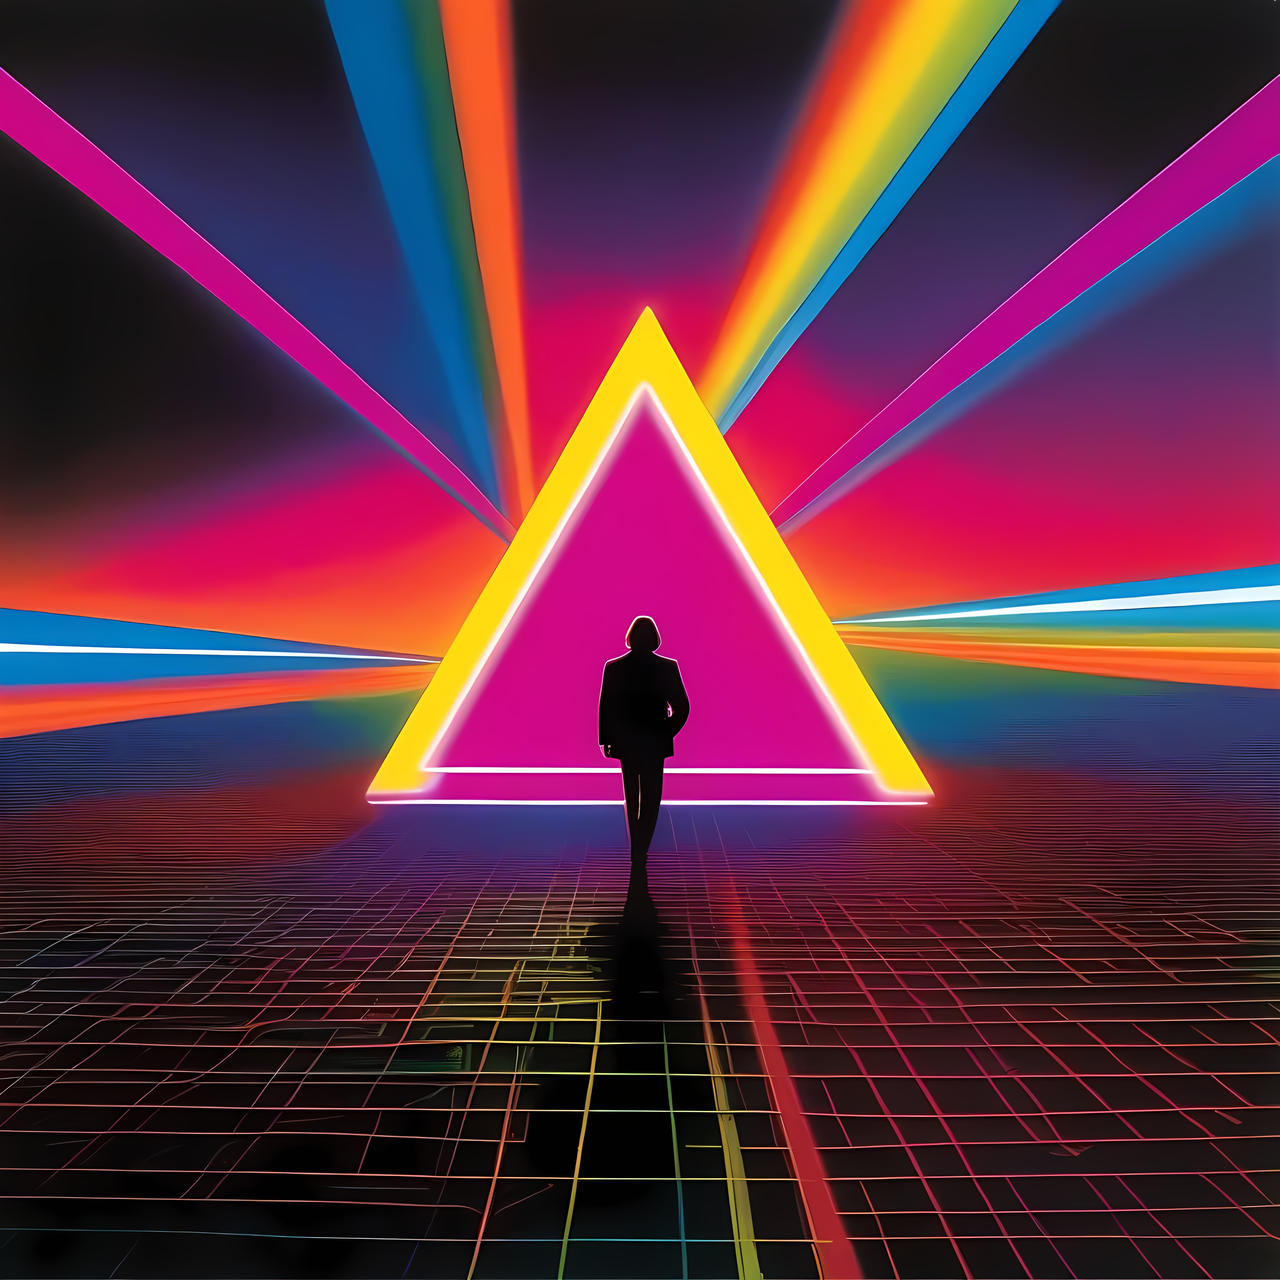 Pink Floyd - reimagined album covers #1 by QuantumReel on DeviantArt